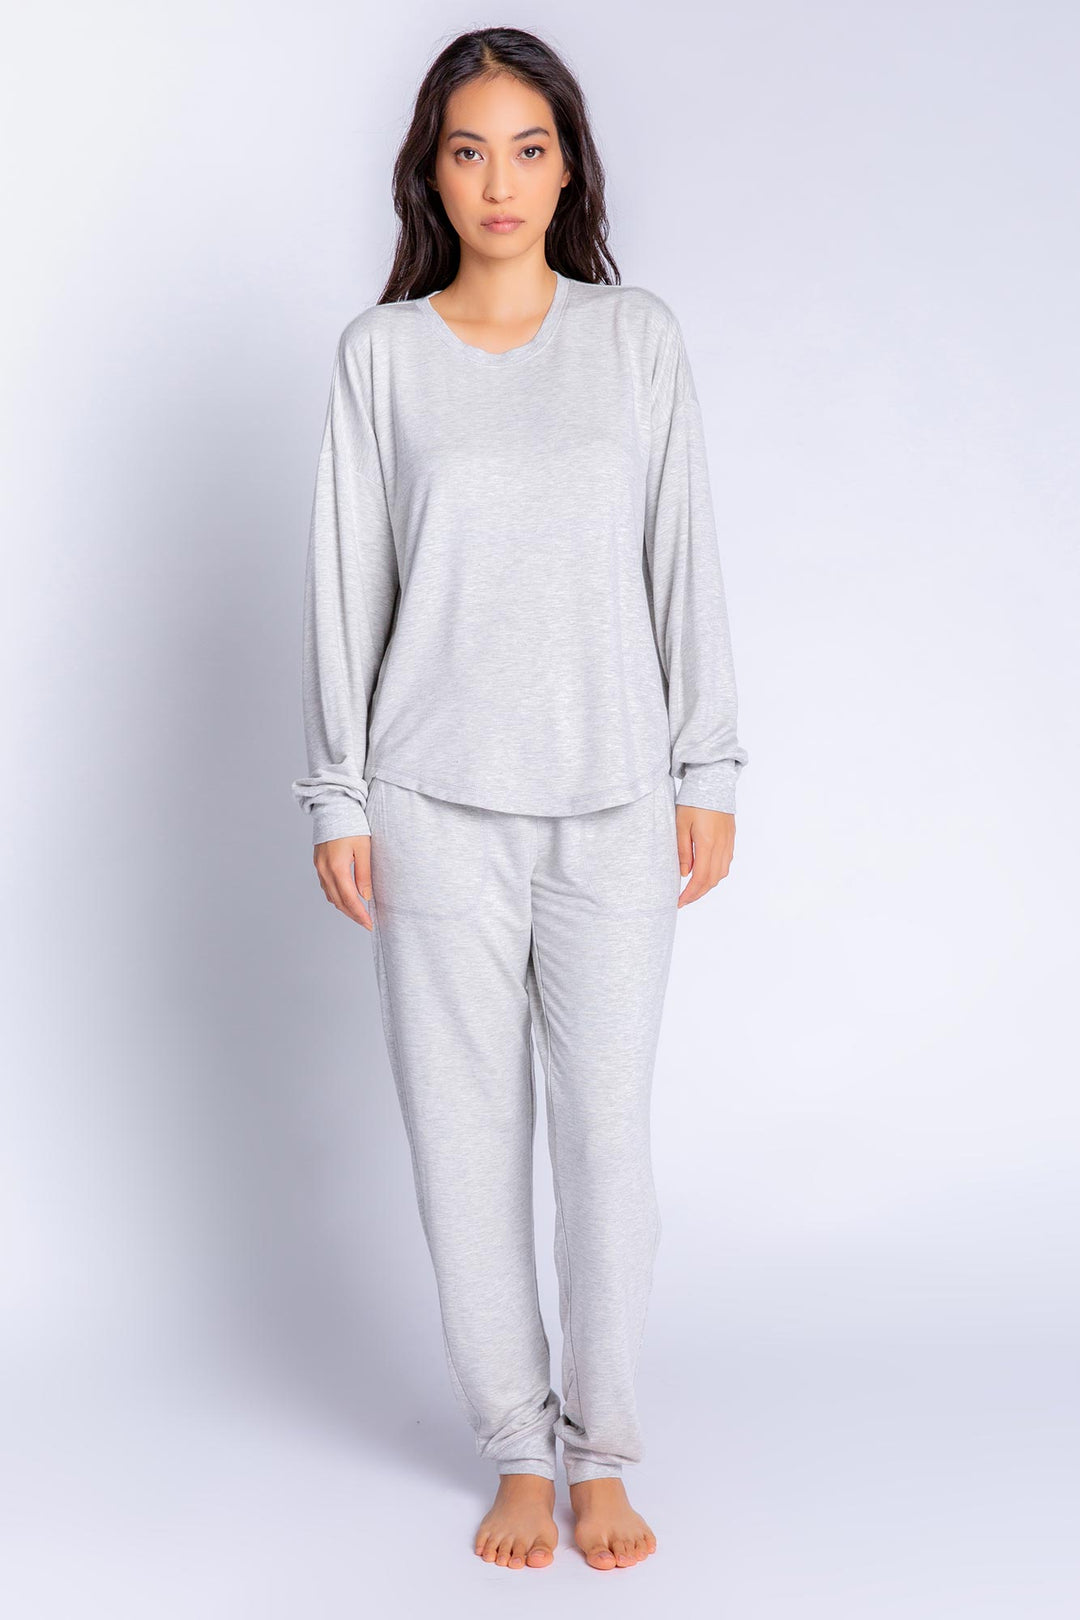 Parisian Tall sweatpants in gray - part of a set